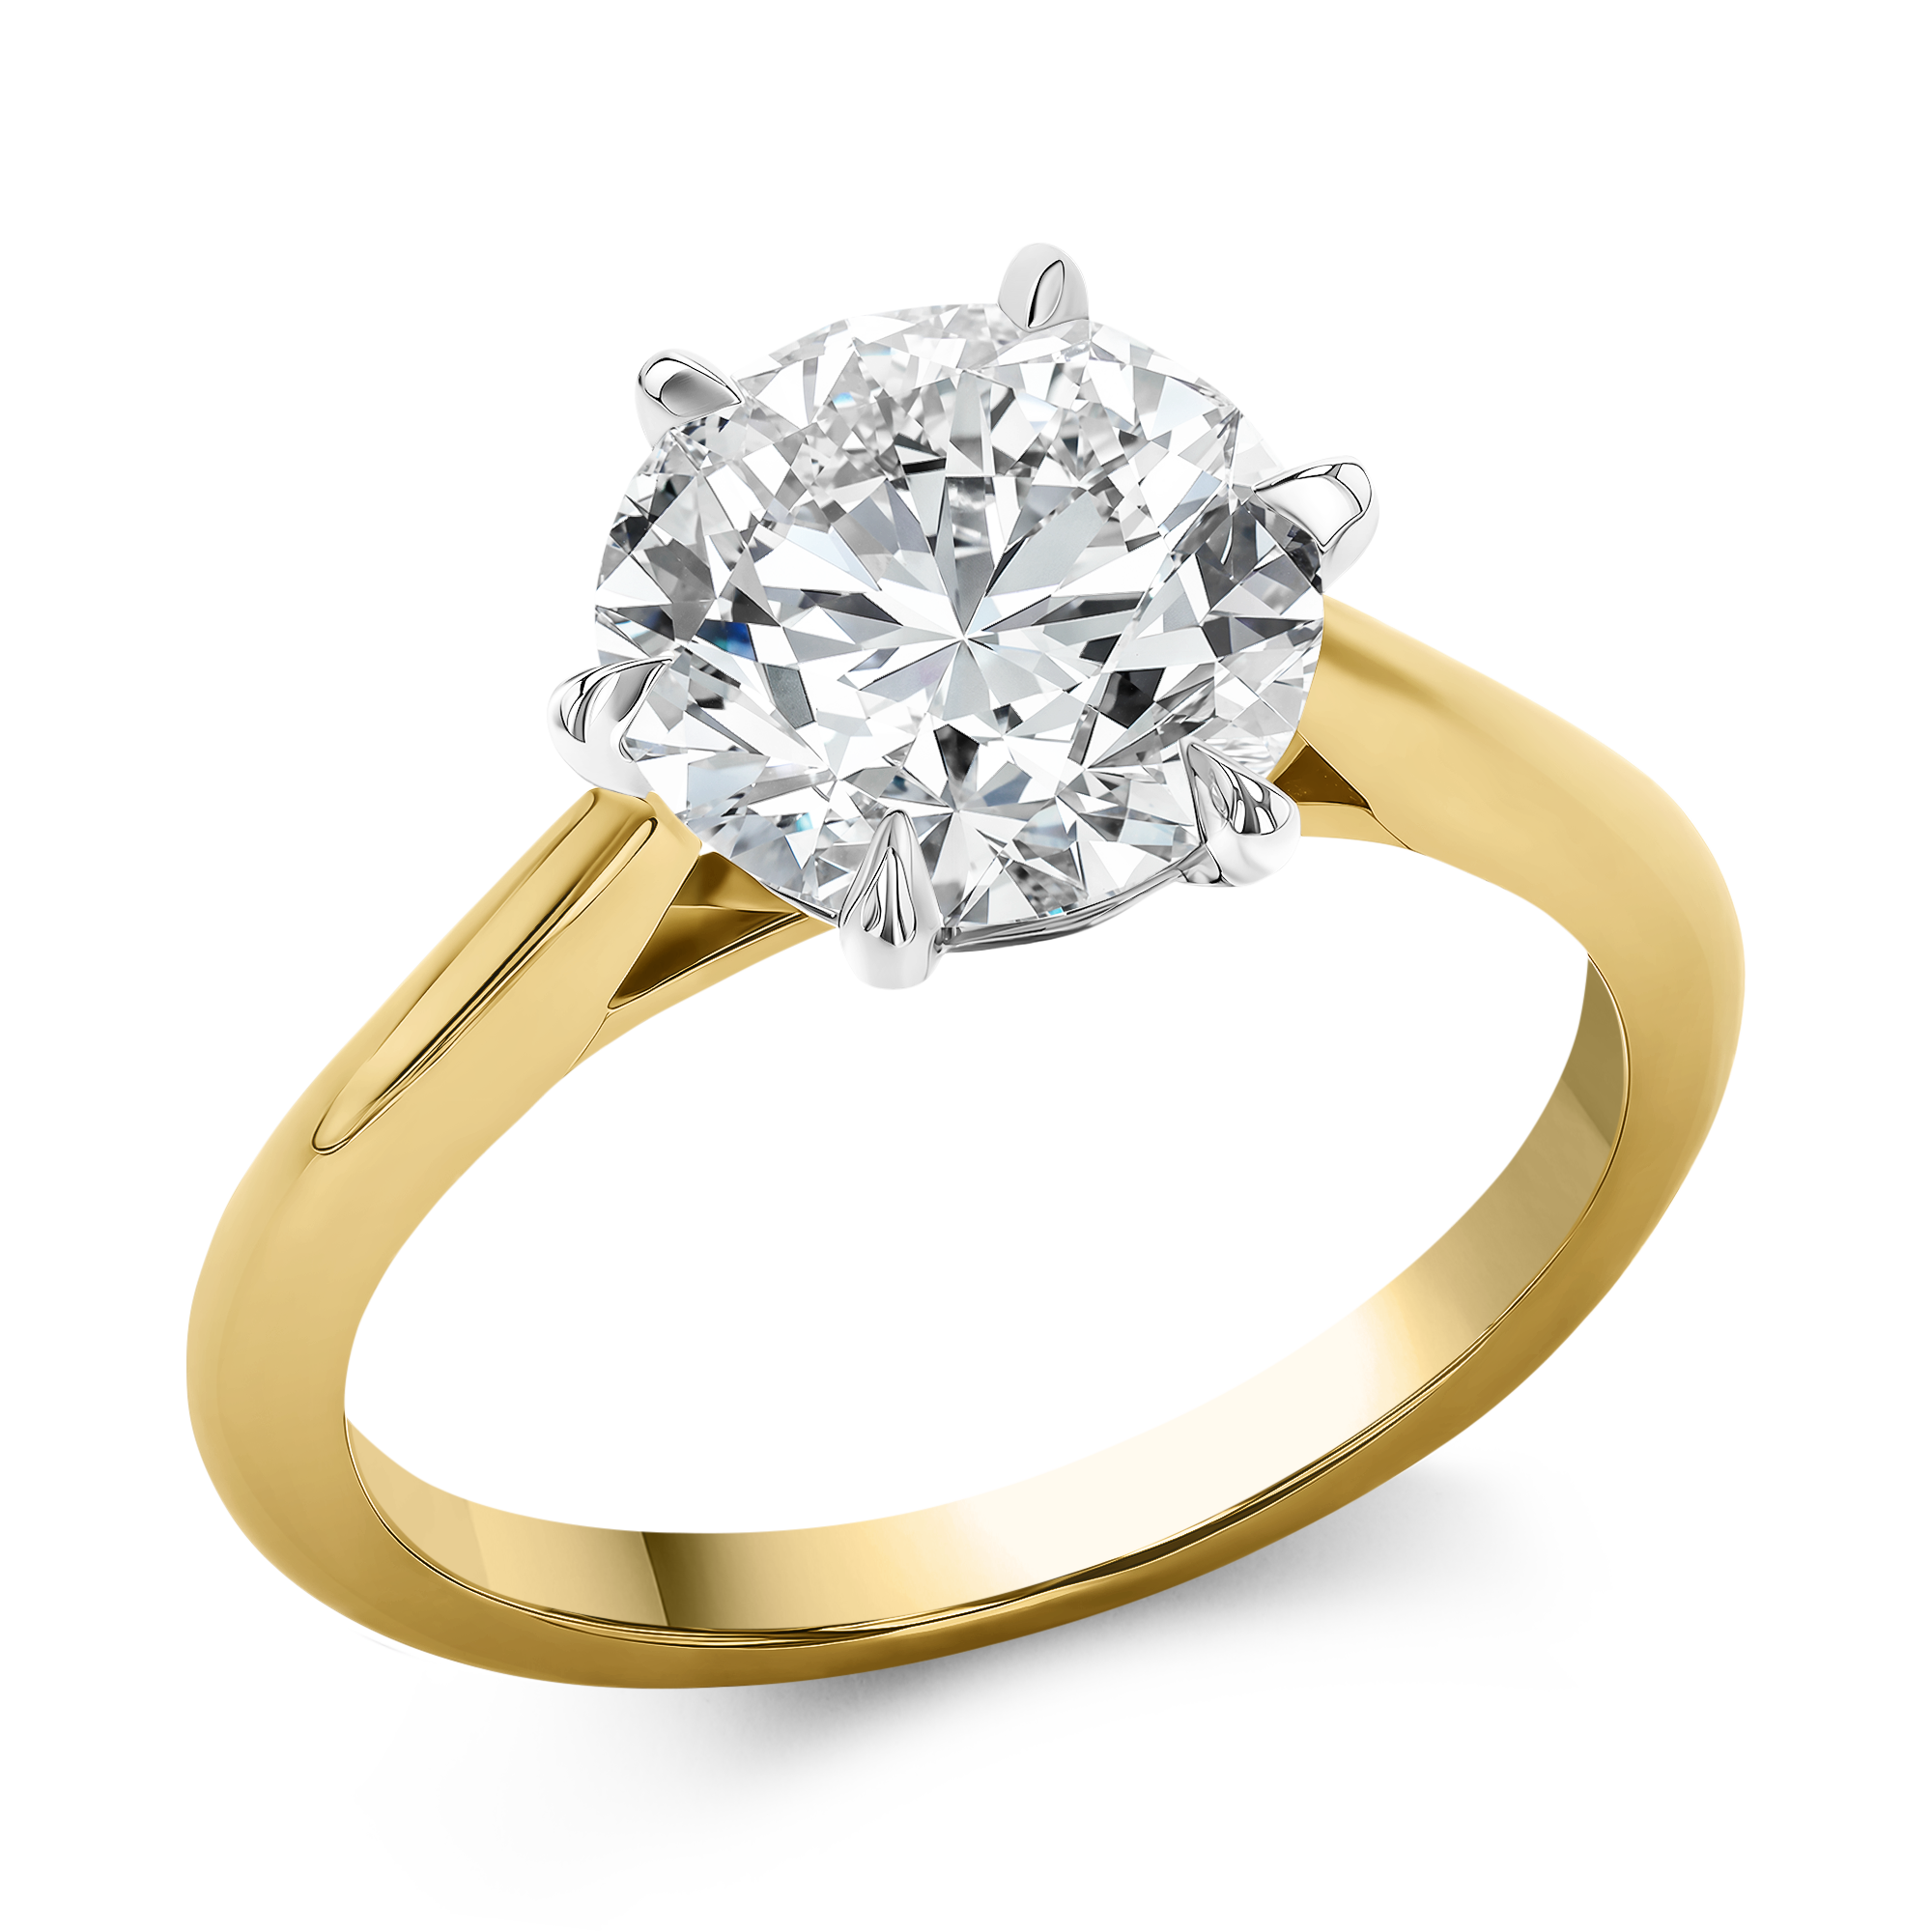 Brilliant Cut Solitaire Diamond Ring Brilliant Cut, Six Claw Set_1